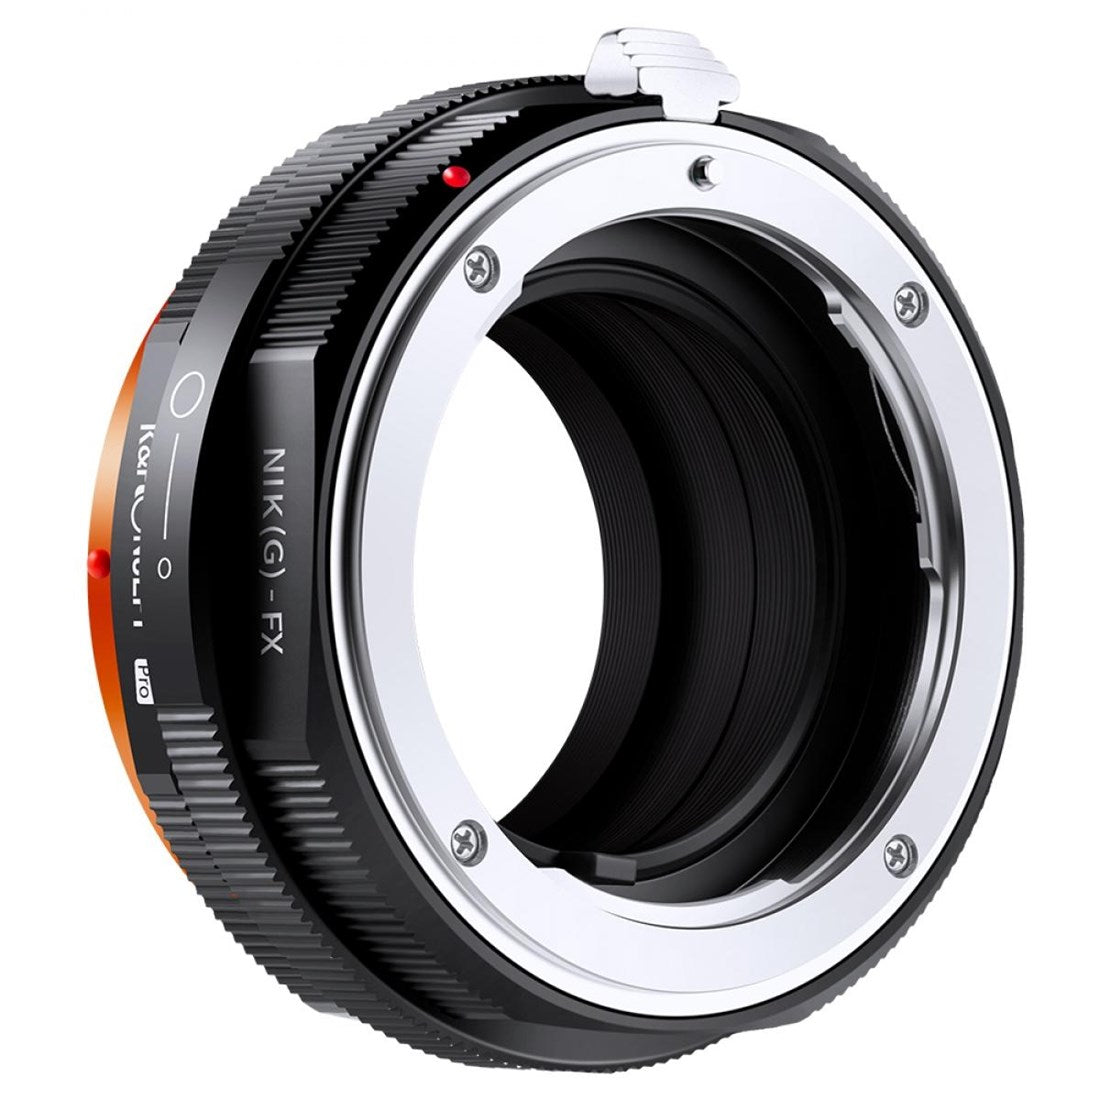 Product Image of K&F concept Nikon NIK(G)-FX PRO high precision lens adapter (orange) K&F Concept Lens Adapter KF06.443